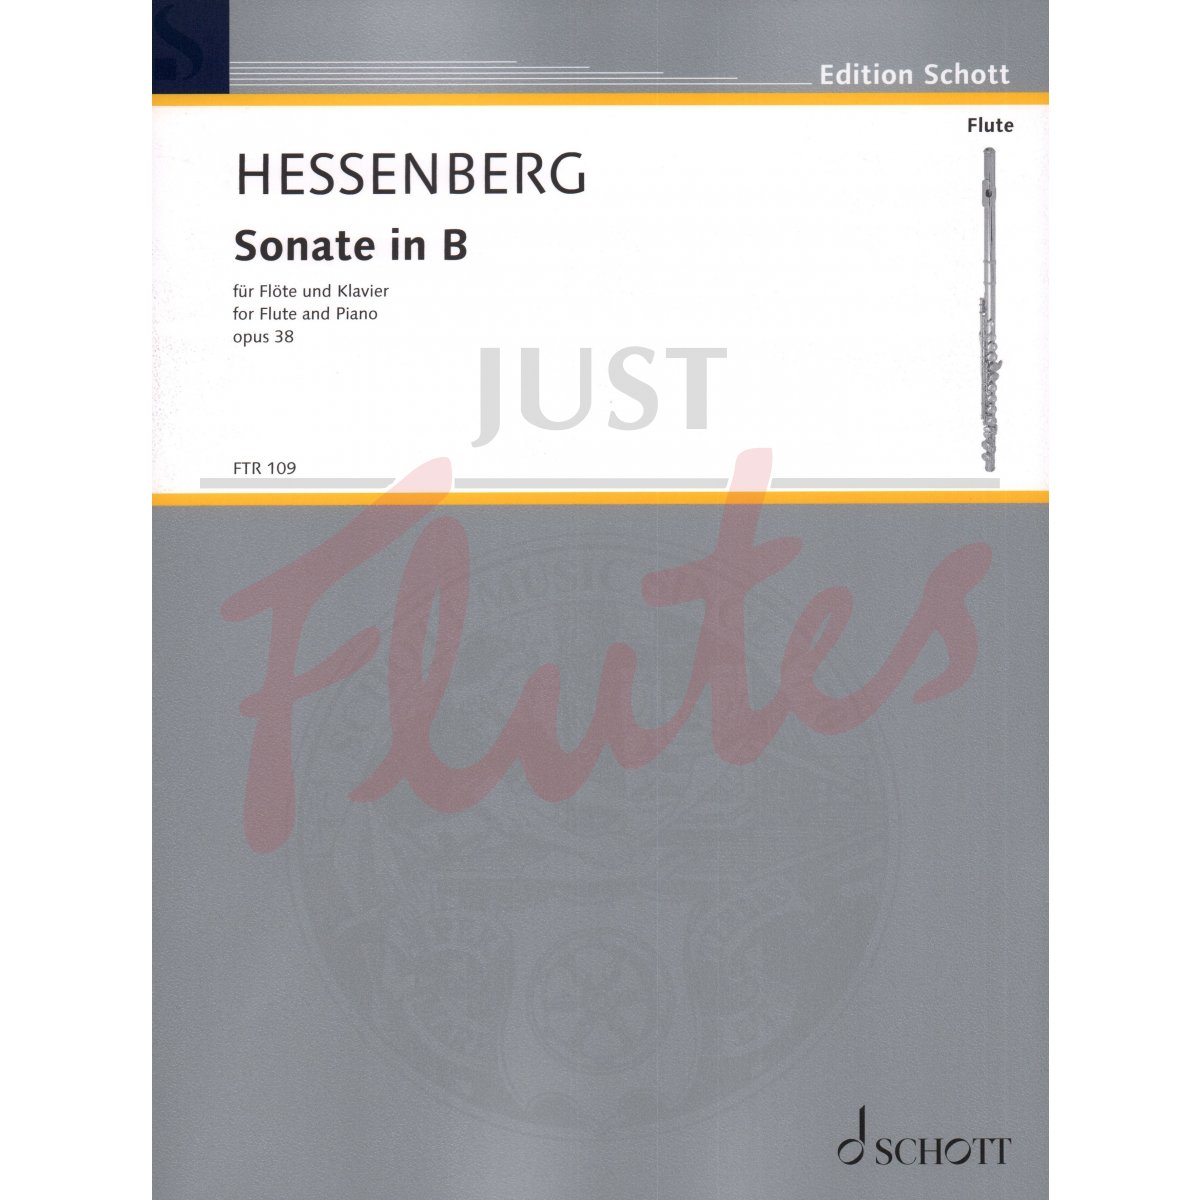 Sonata in B for Flute and Piano